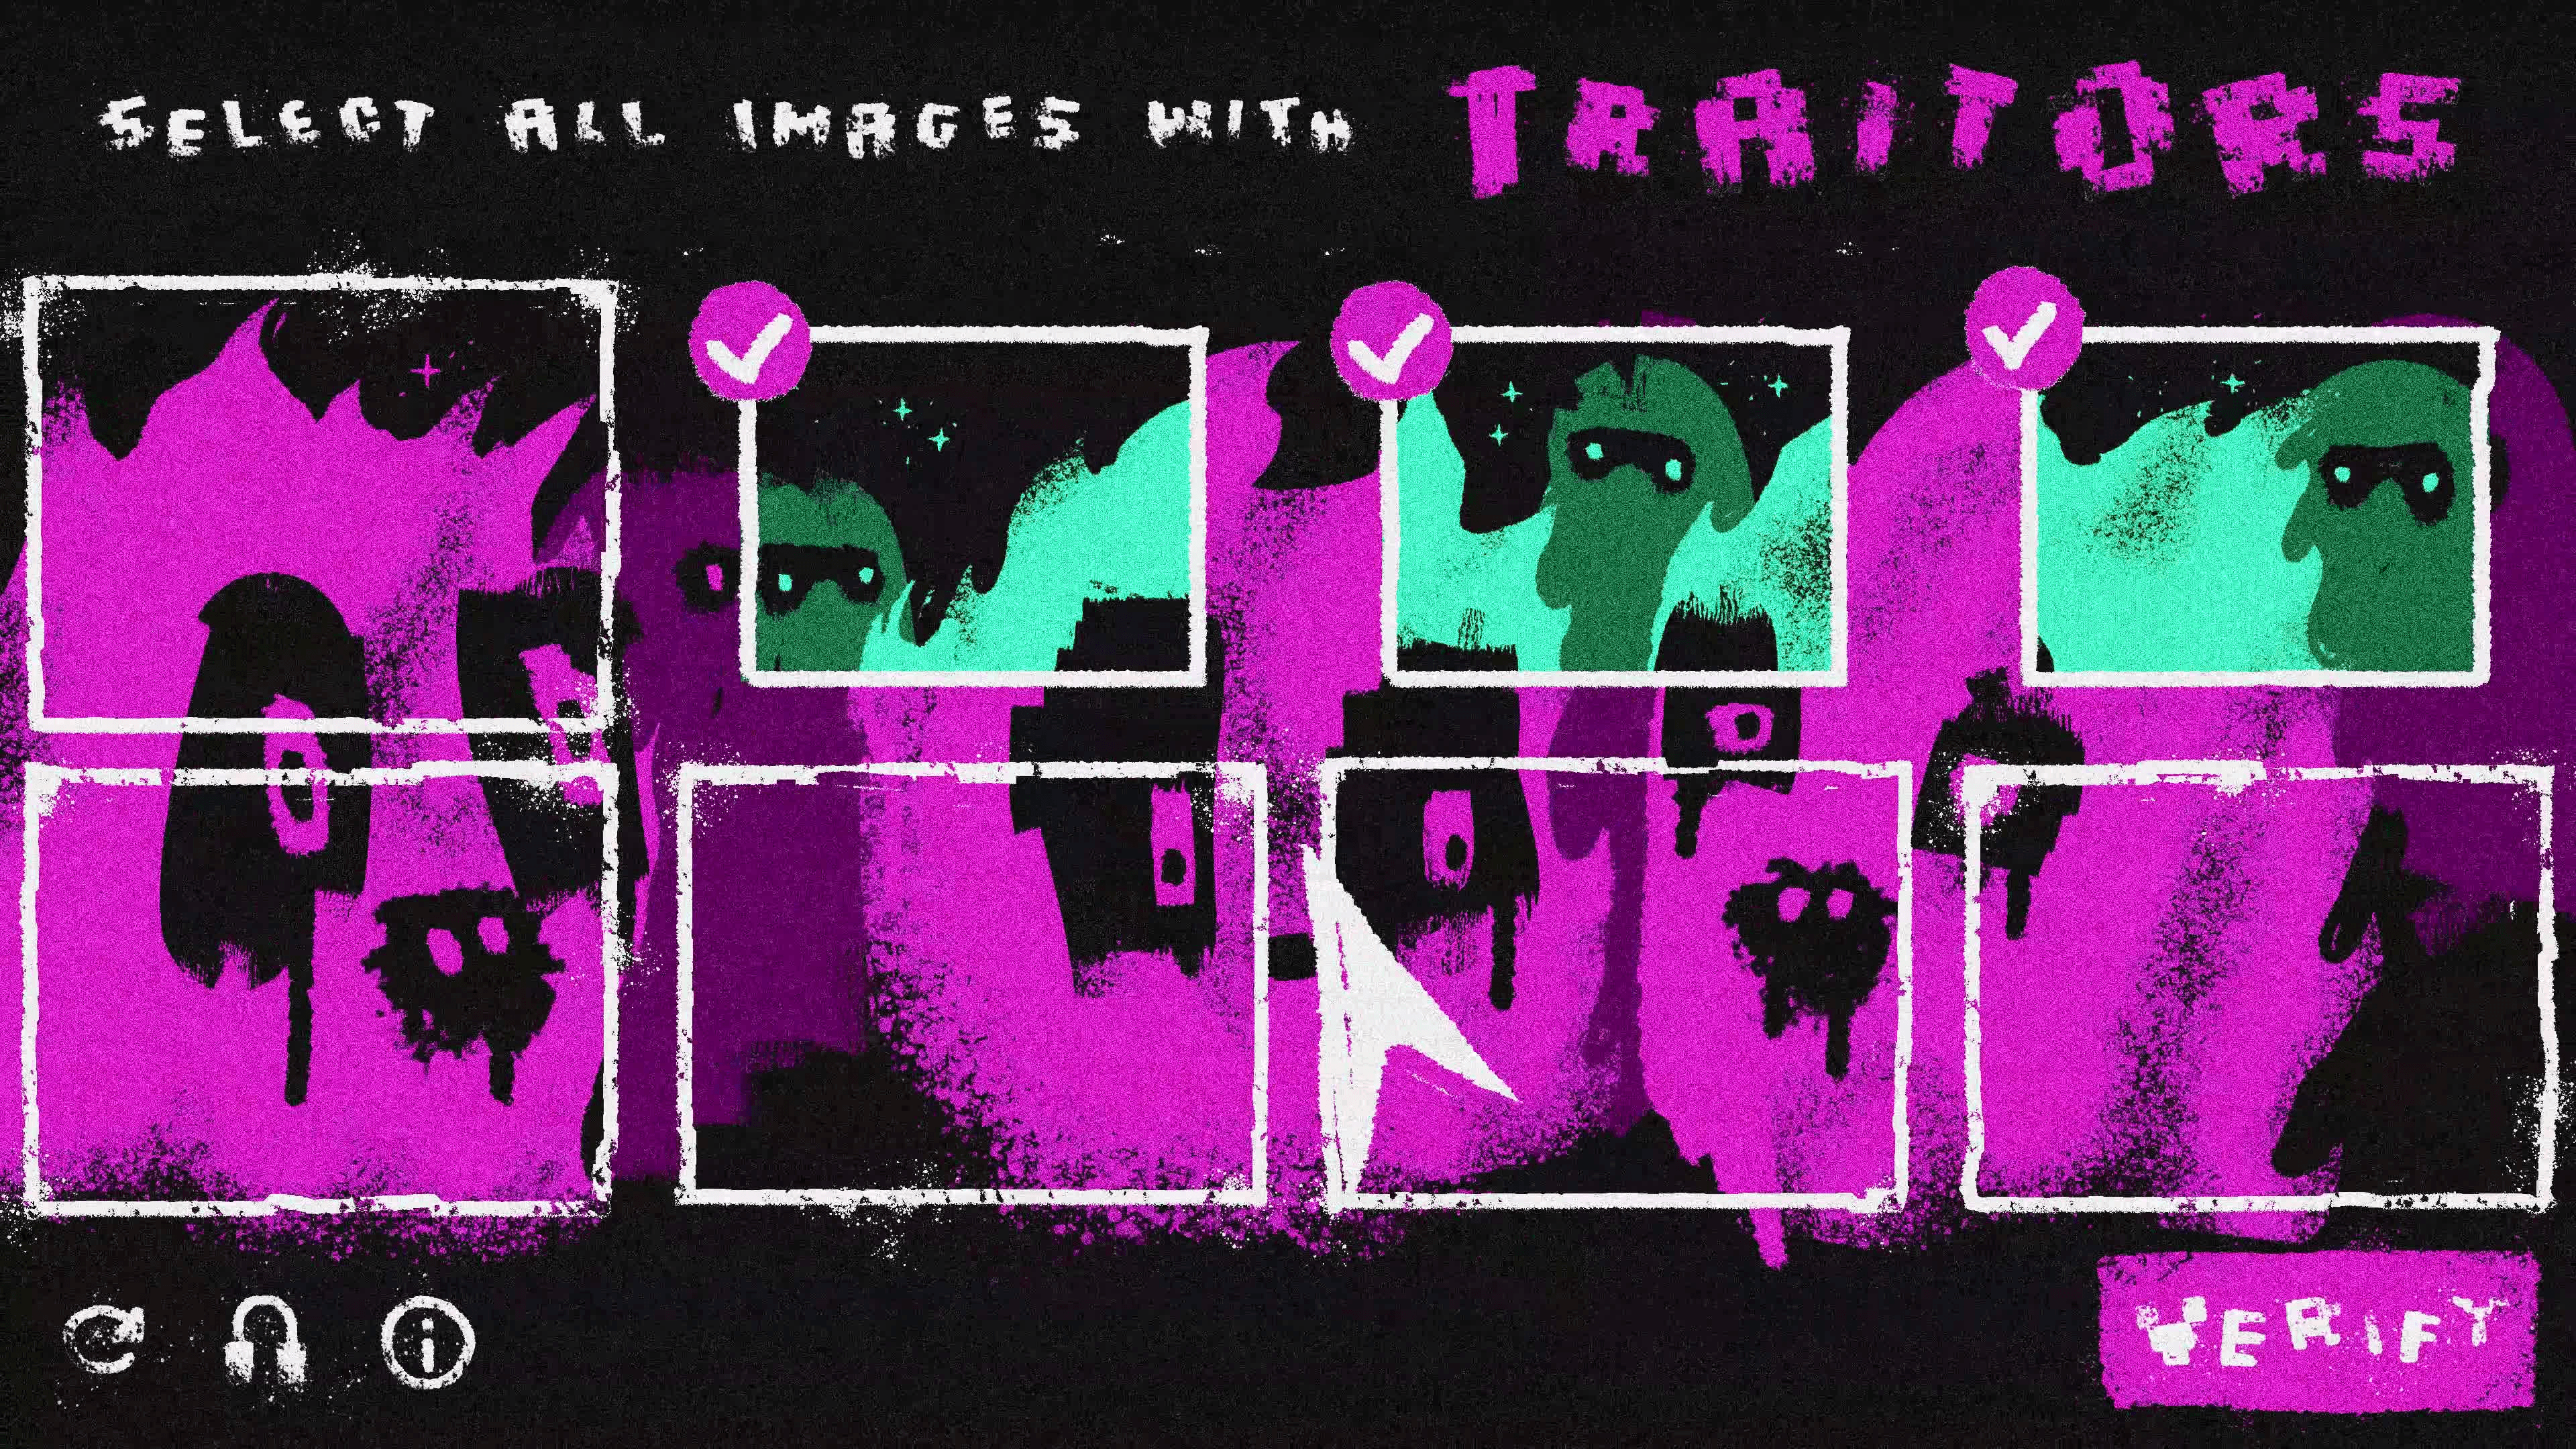 Traitors #16/51